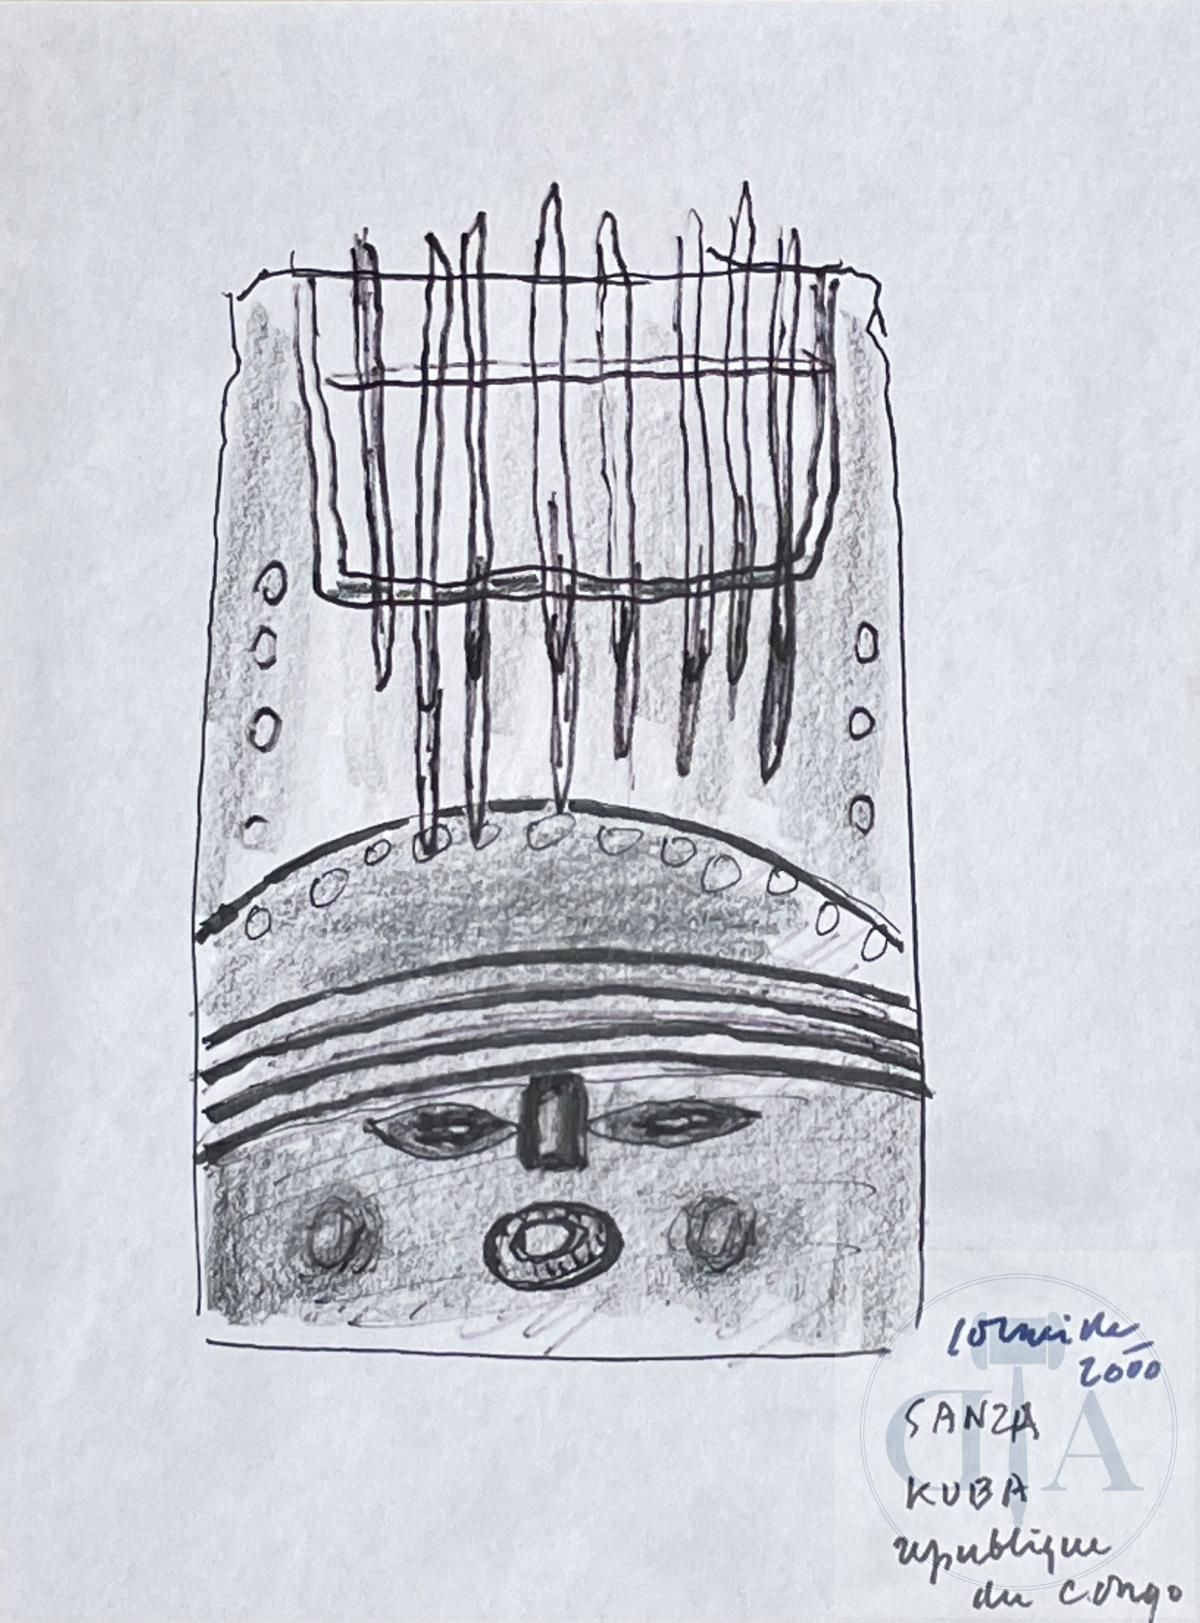 Null Cornelius/Original work "Sanza Kuba". Felt pen and pencil on paper. Signed &hellip;